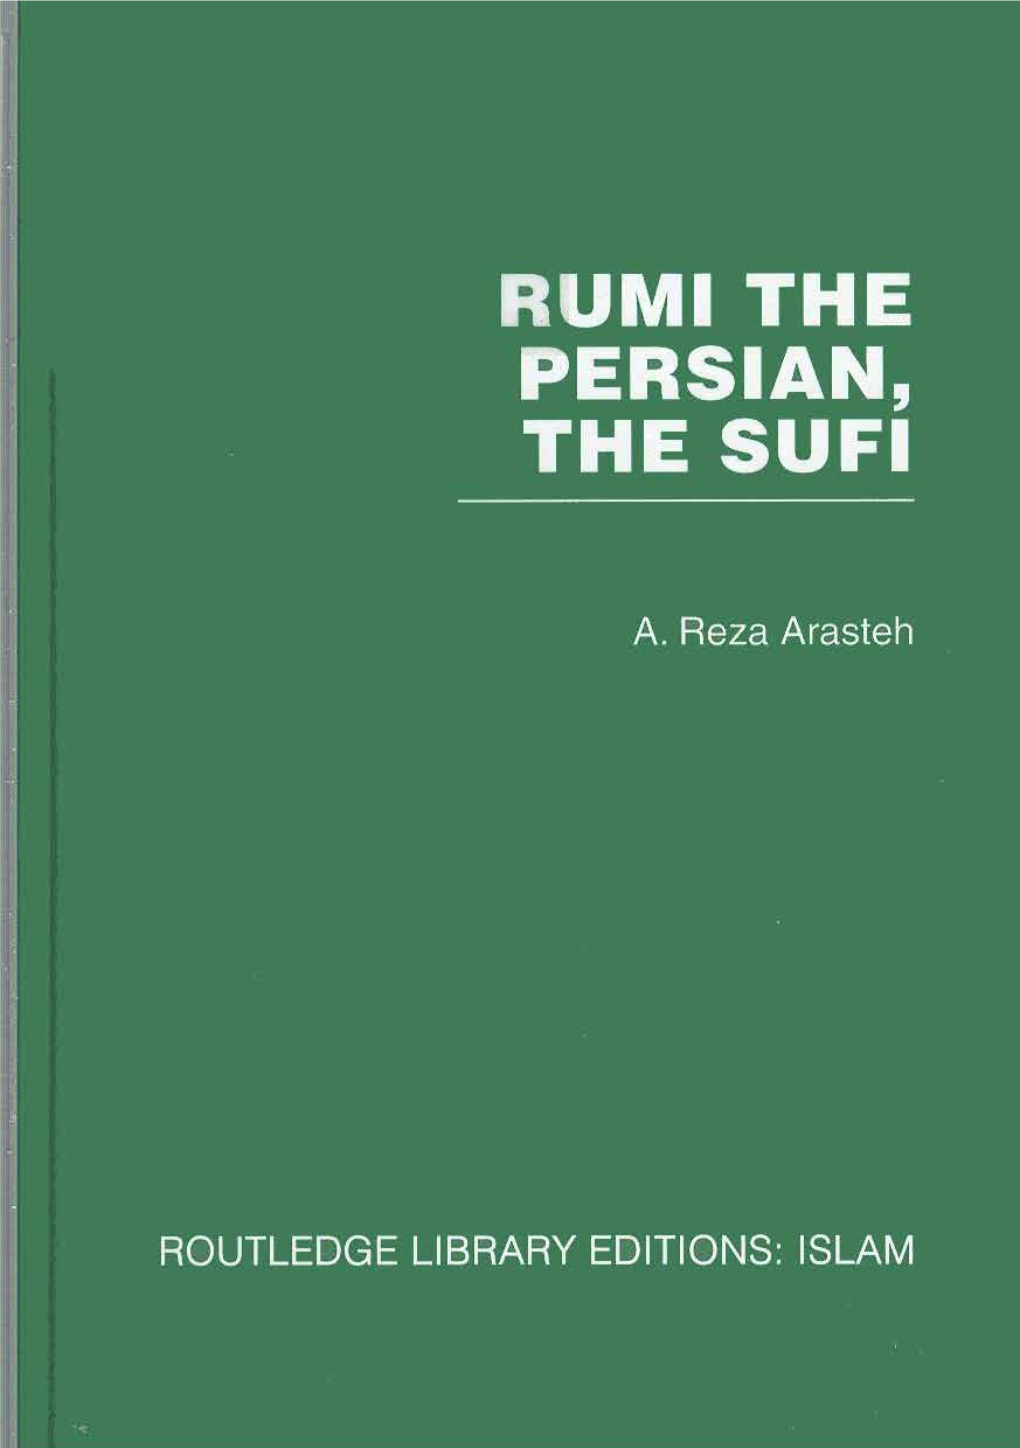 Rumi the Persian, the Sufi by A. Reza Arasteh.Pdf